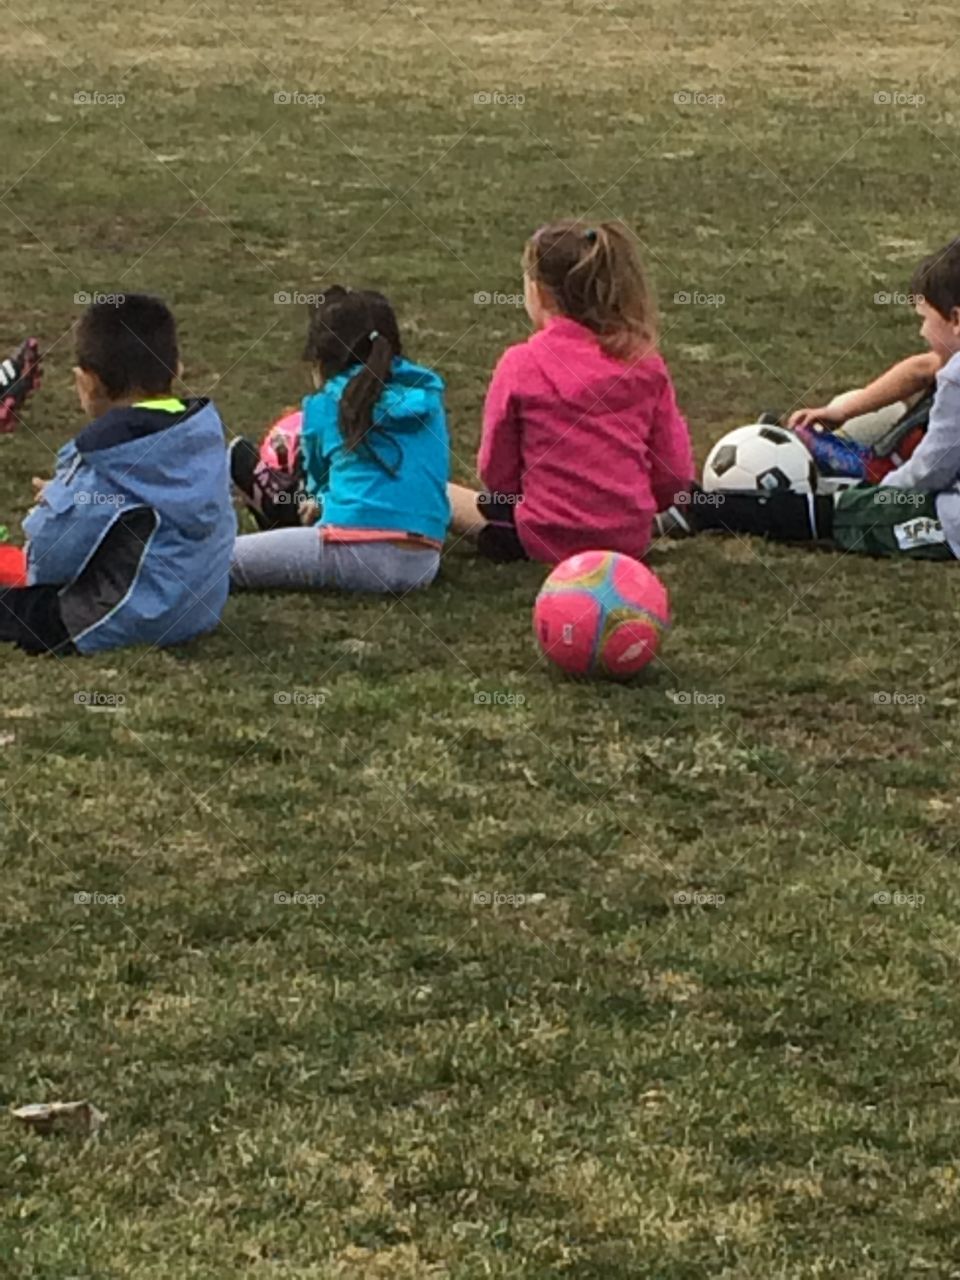 Children waiting for soccer practice 